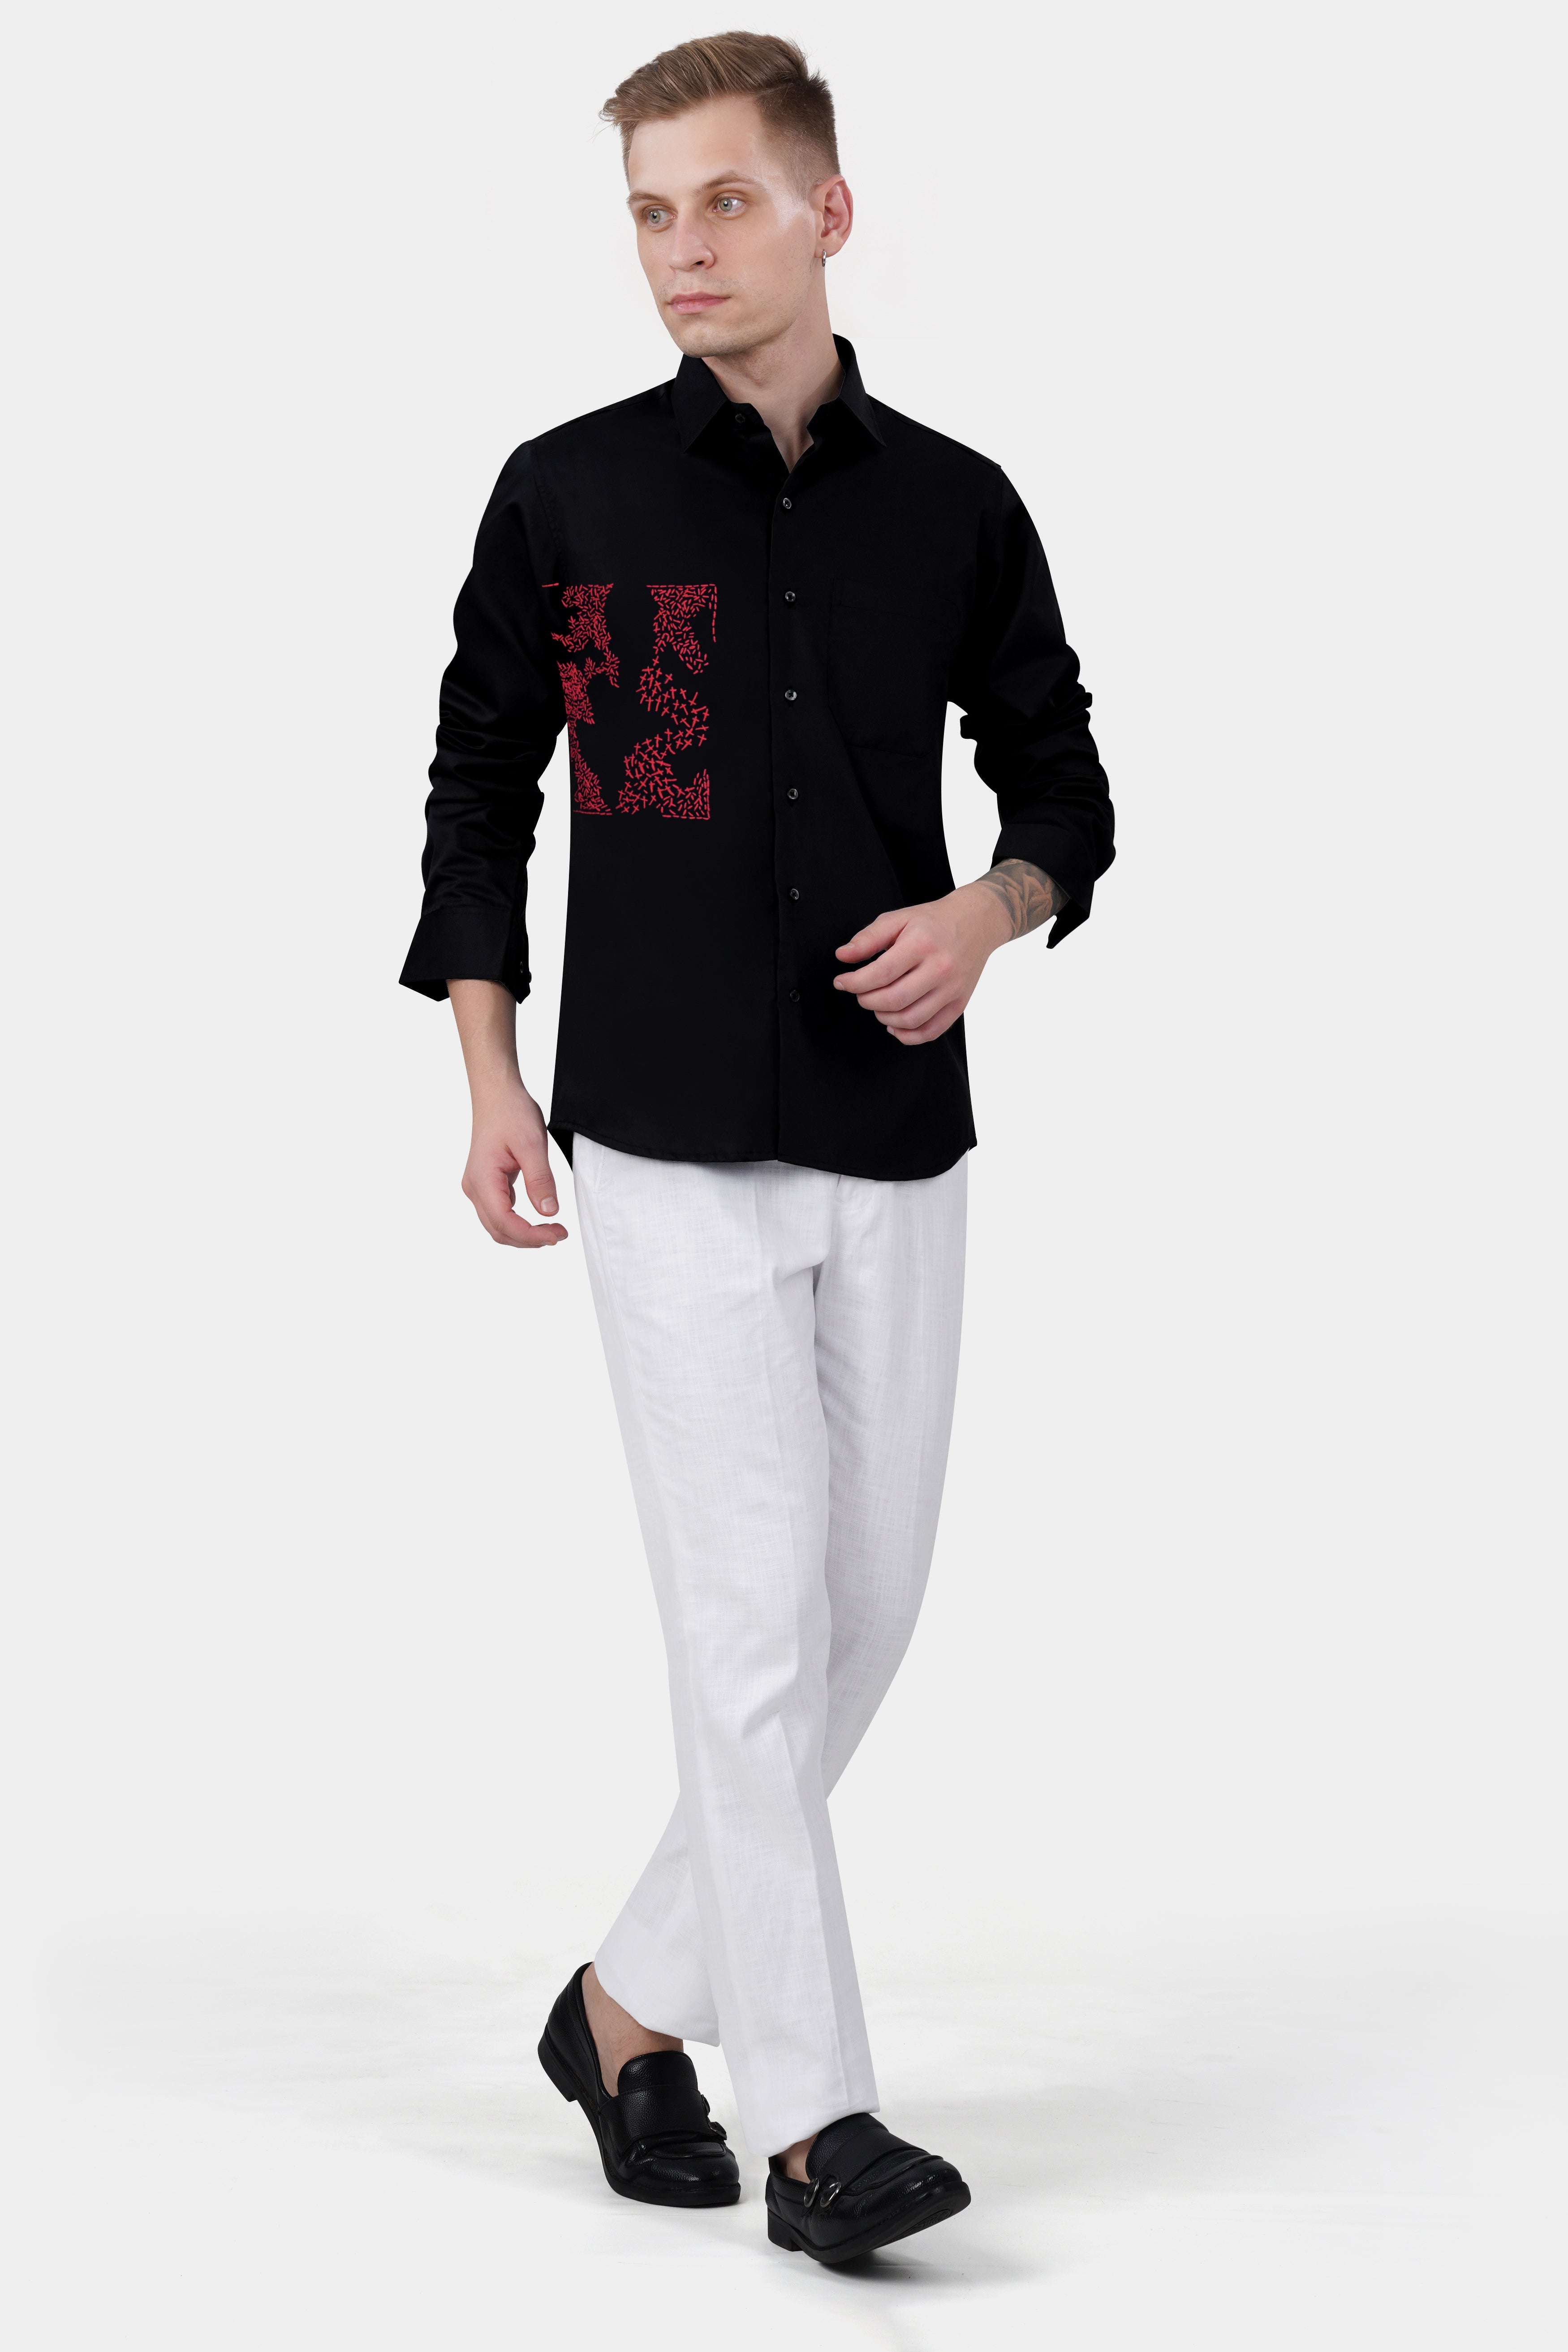 Jade Black with Shiraz Red Embroidered Subtle Sheen Super Soft Premium Cotton Shirt